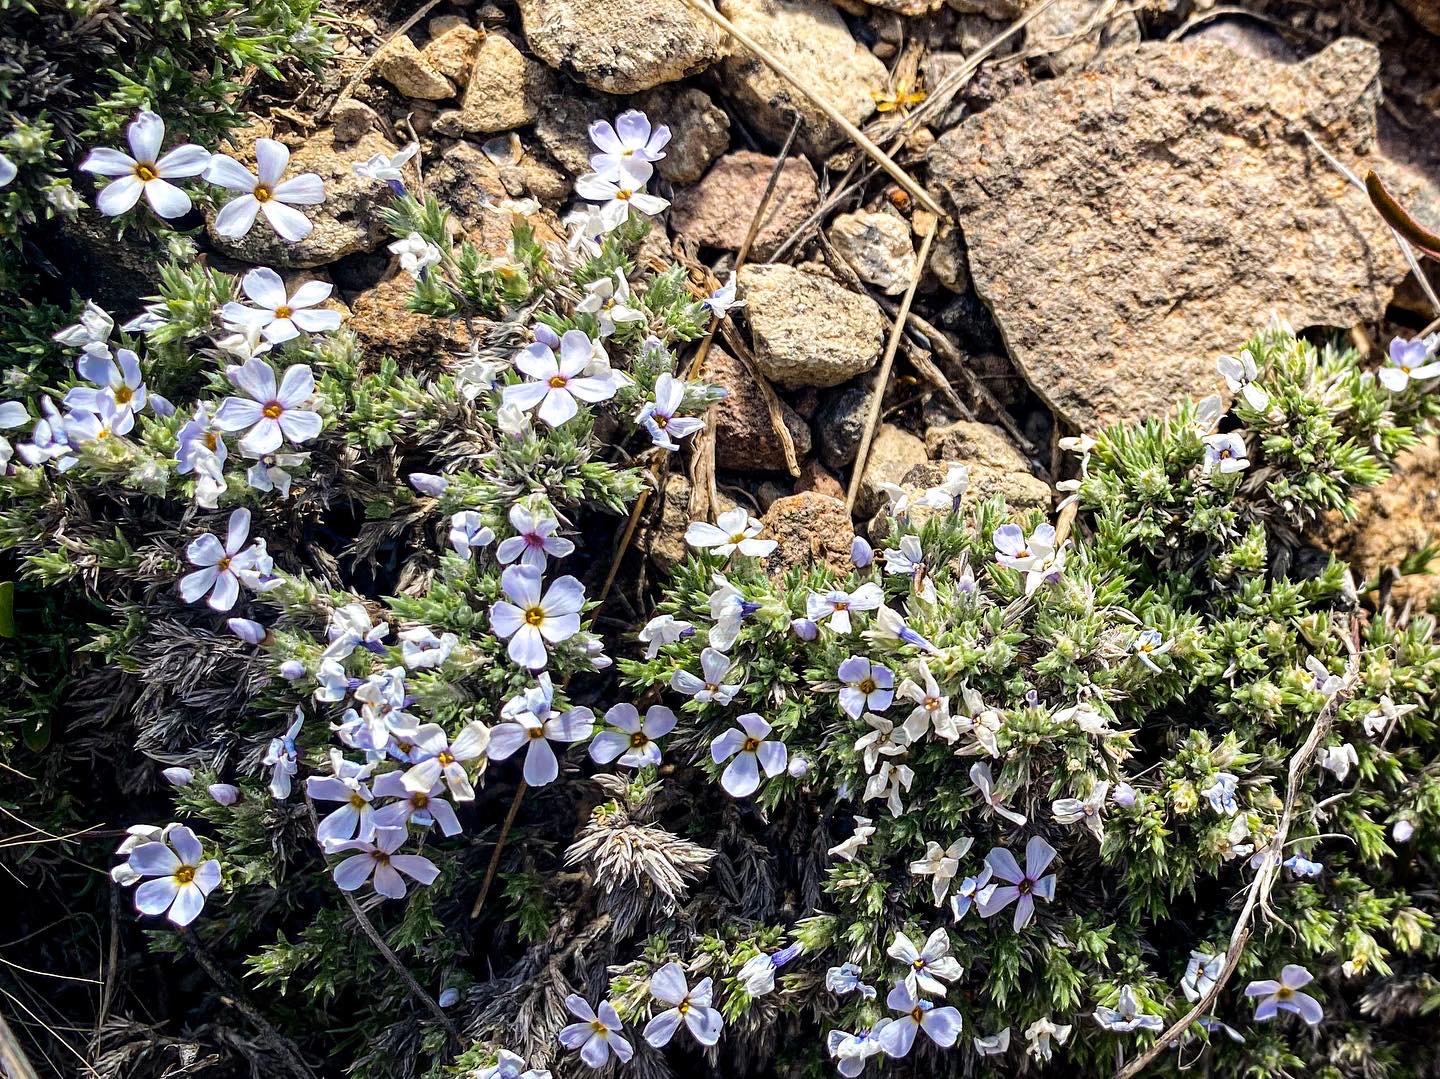 Small wildflowers hartman rocks growing on rocks